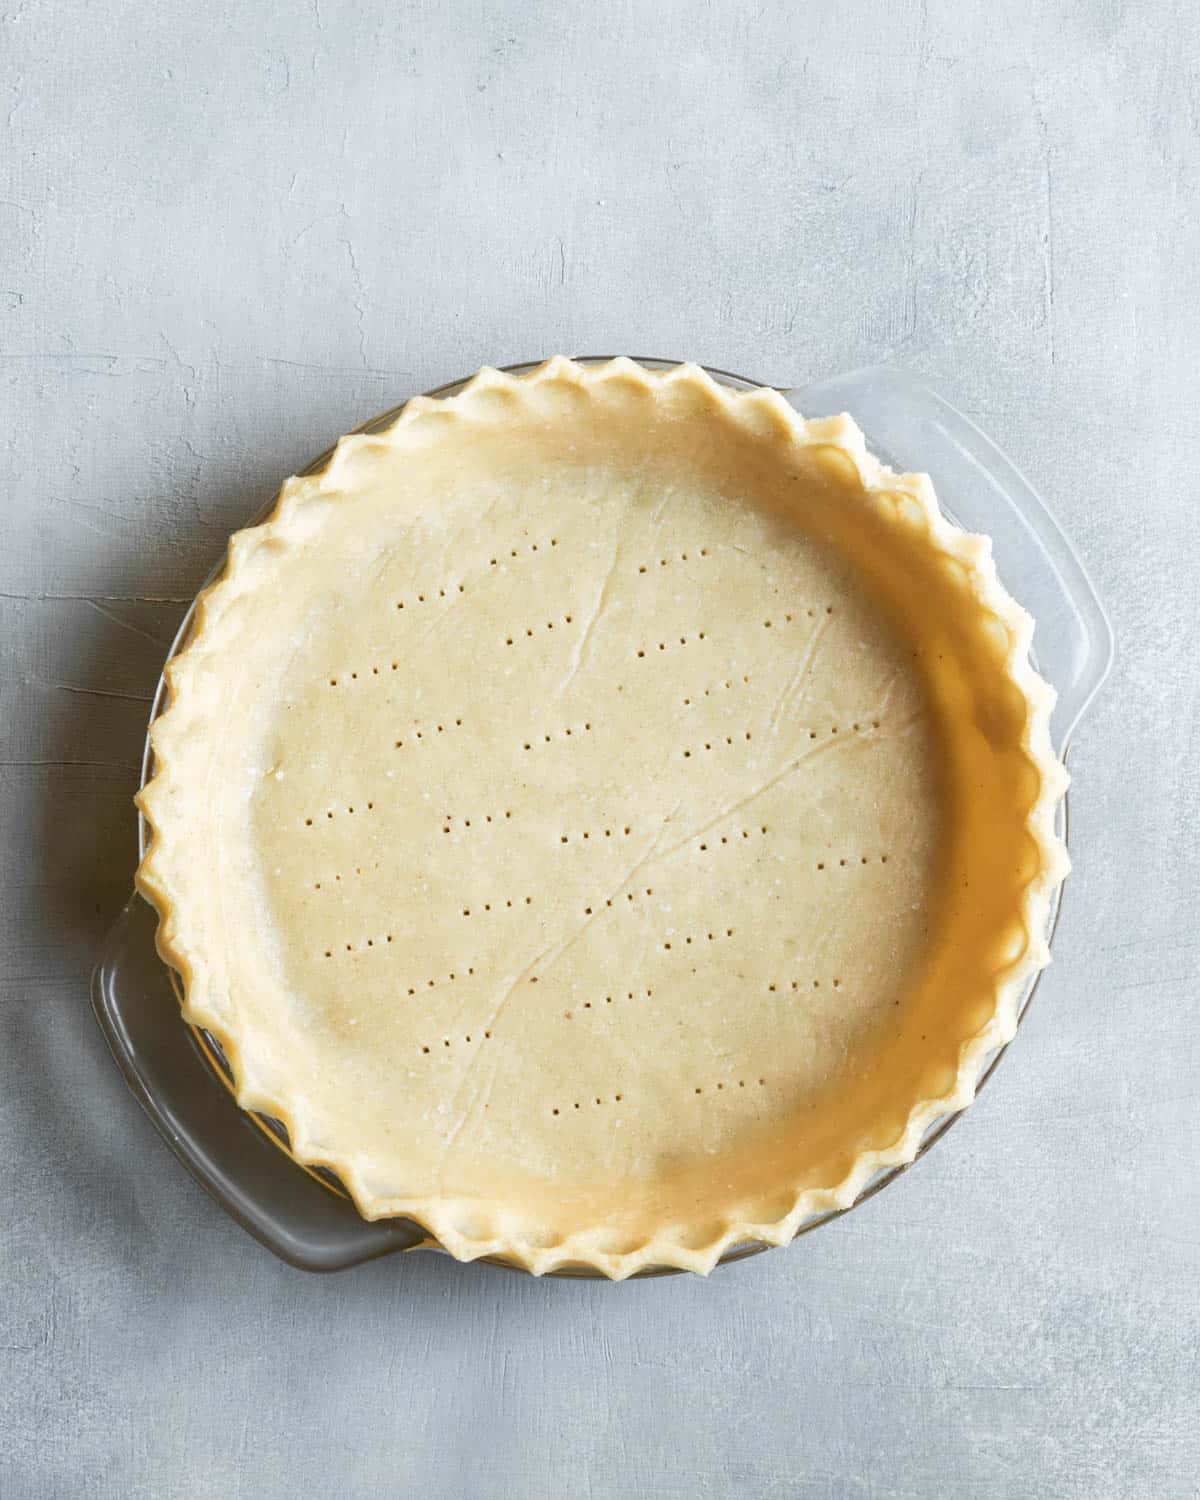 unbaked pie crust with decorative edges.